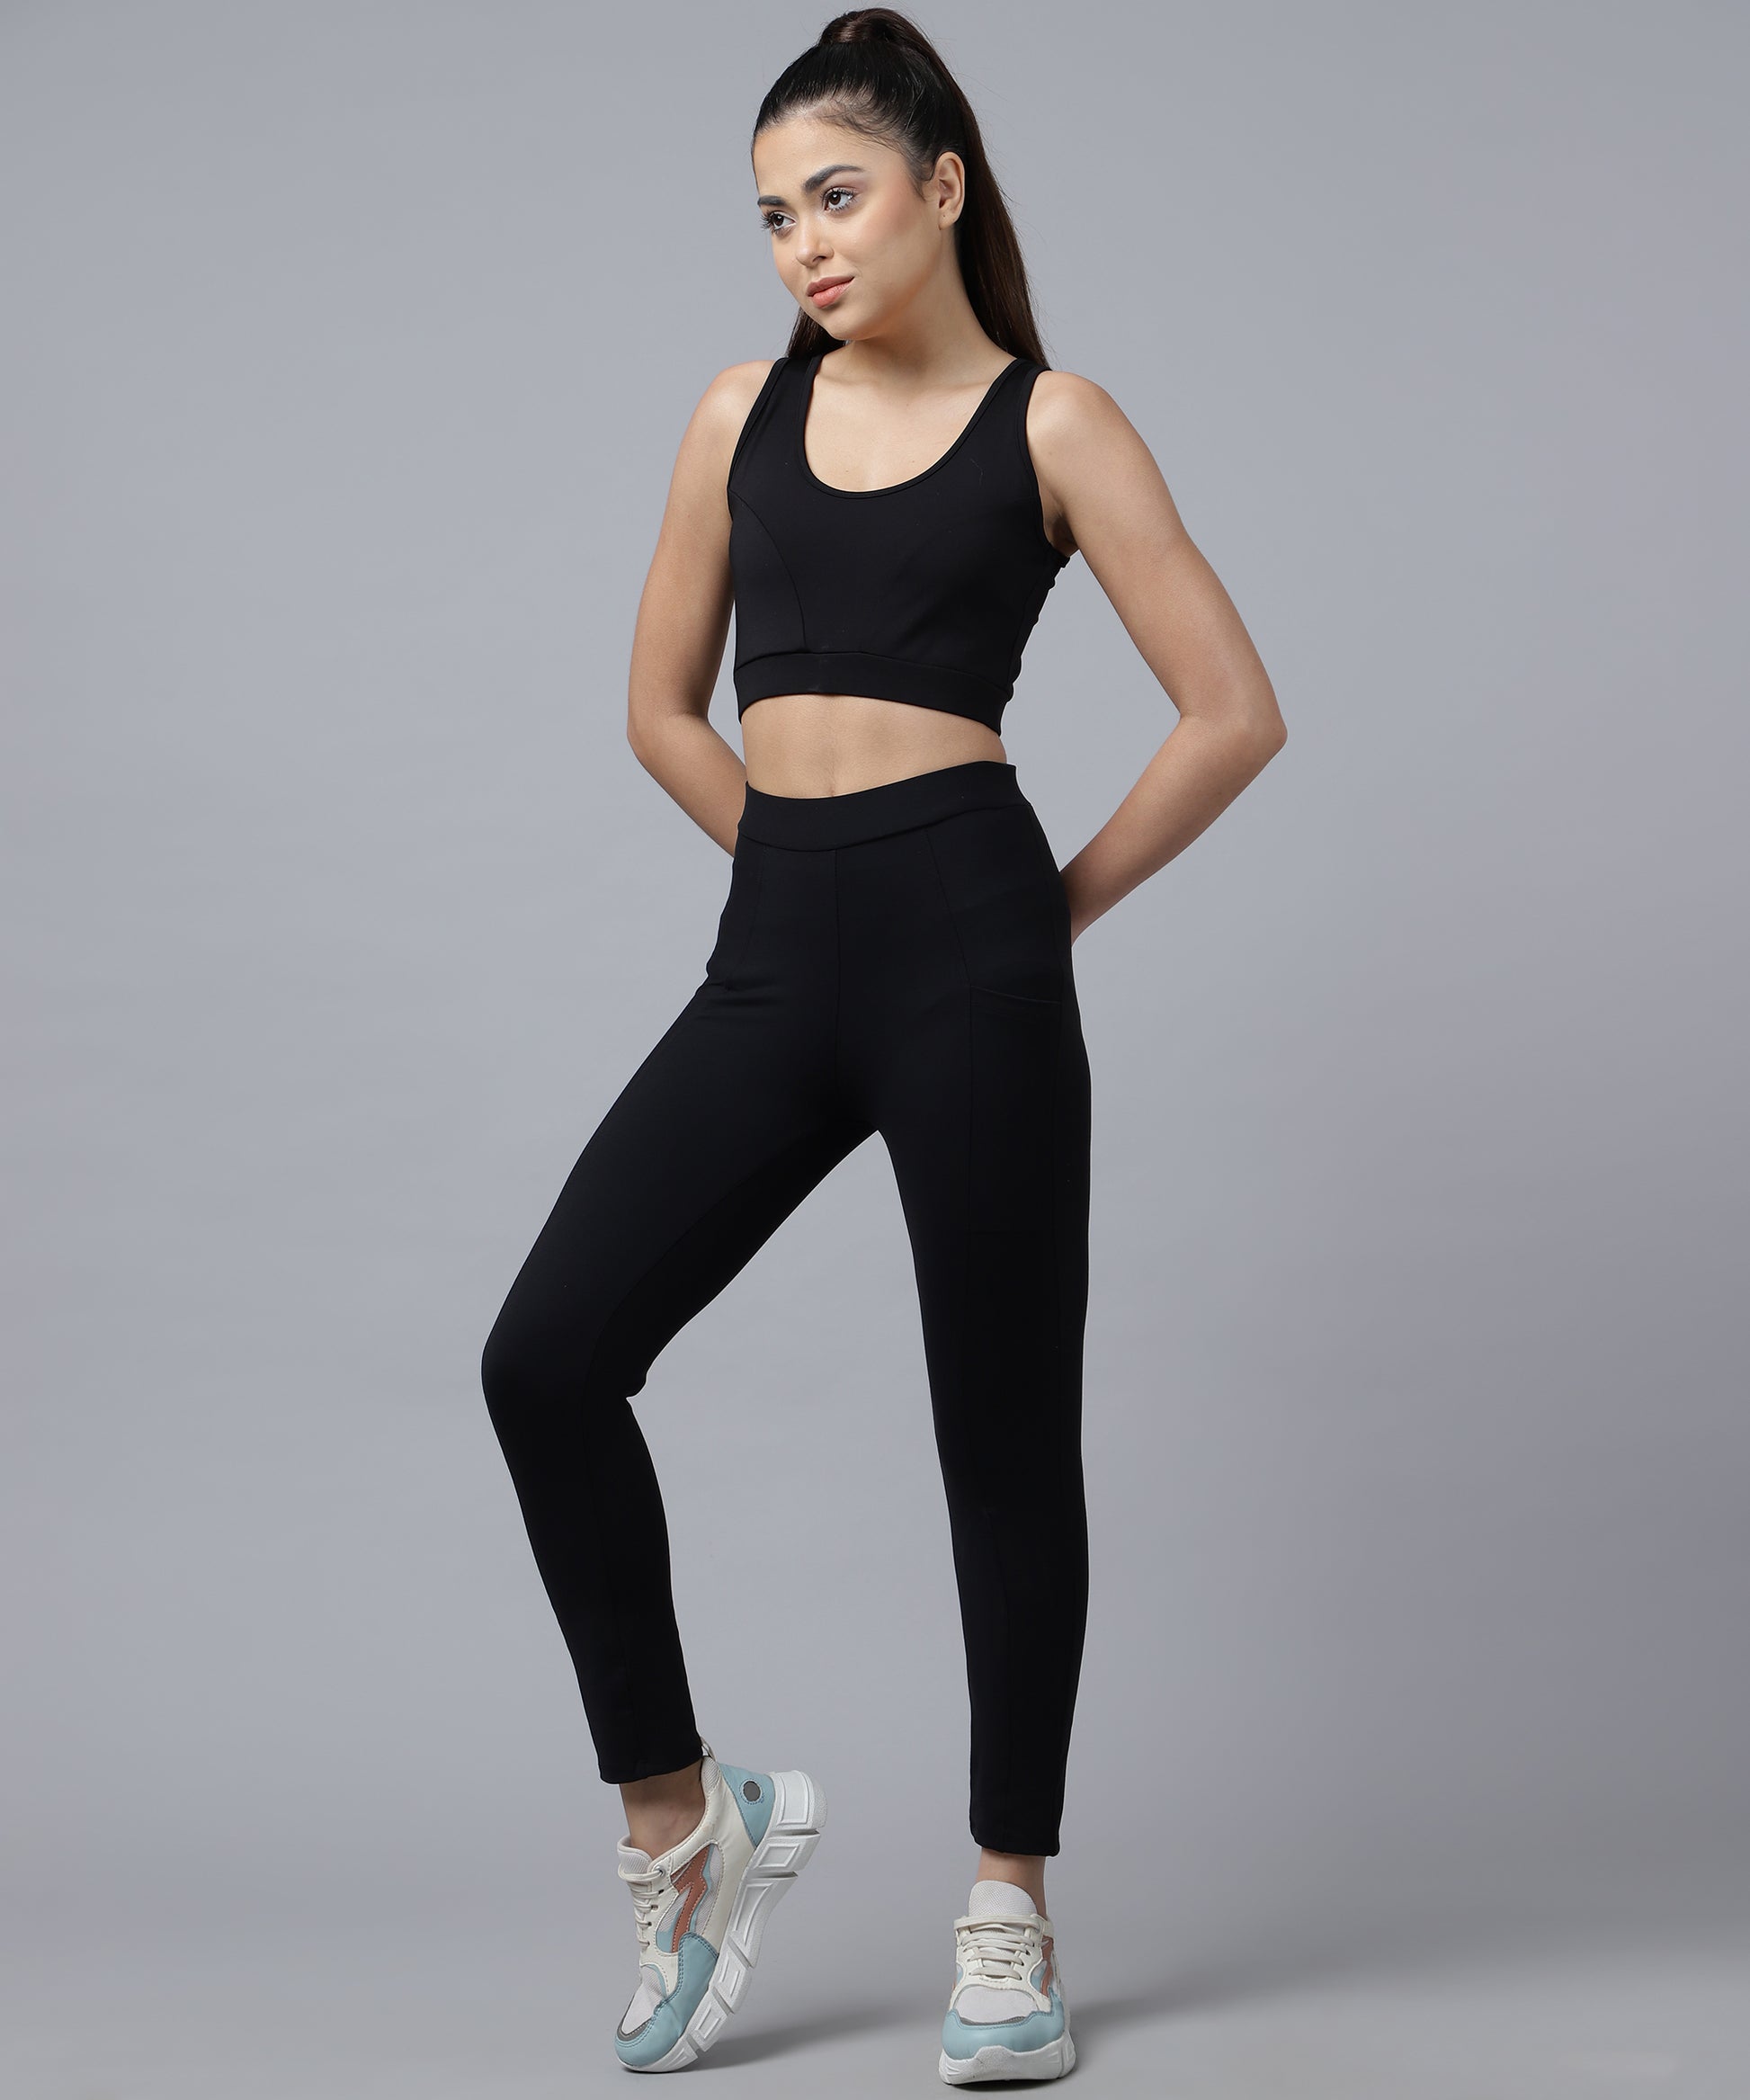 Mesh Yoga Suit for Fitness Sportswear Women Tracksuit Transparent